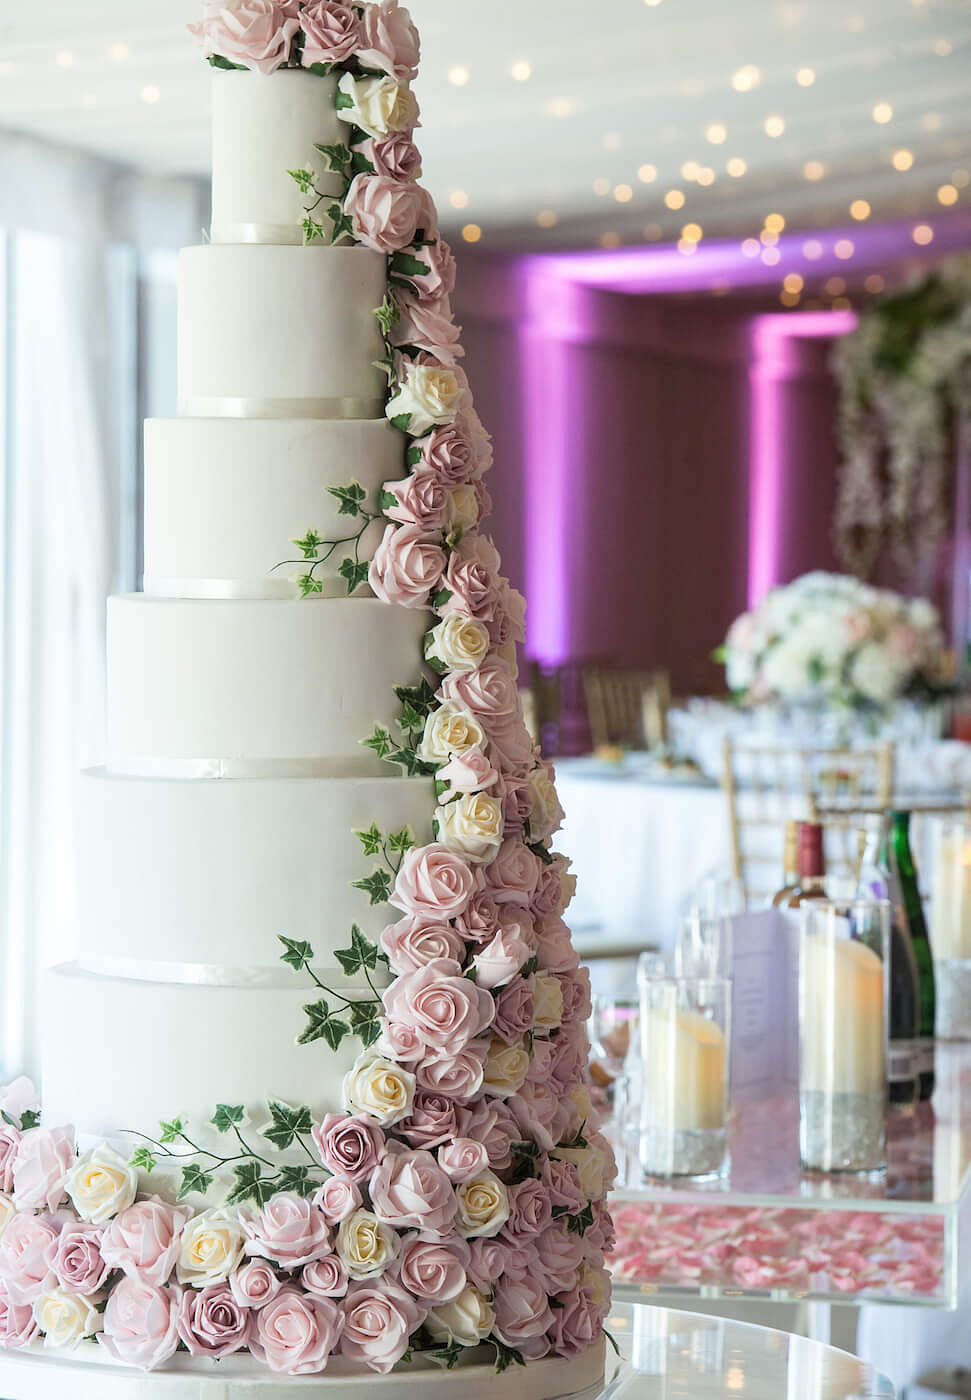 40 Elegant Wedding Cakes with Cupcakes and Flowers - Bellacocosum |  Buttercream wedding cake, Simple wedding cake, Wedding cakes with cupcakes